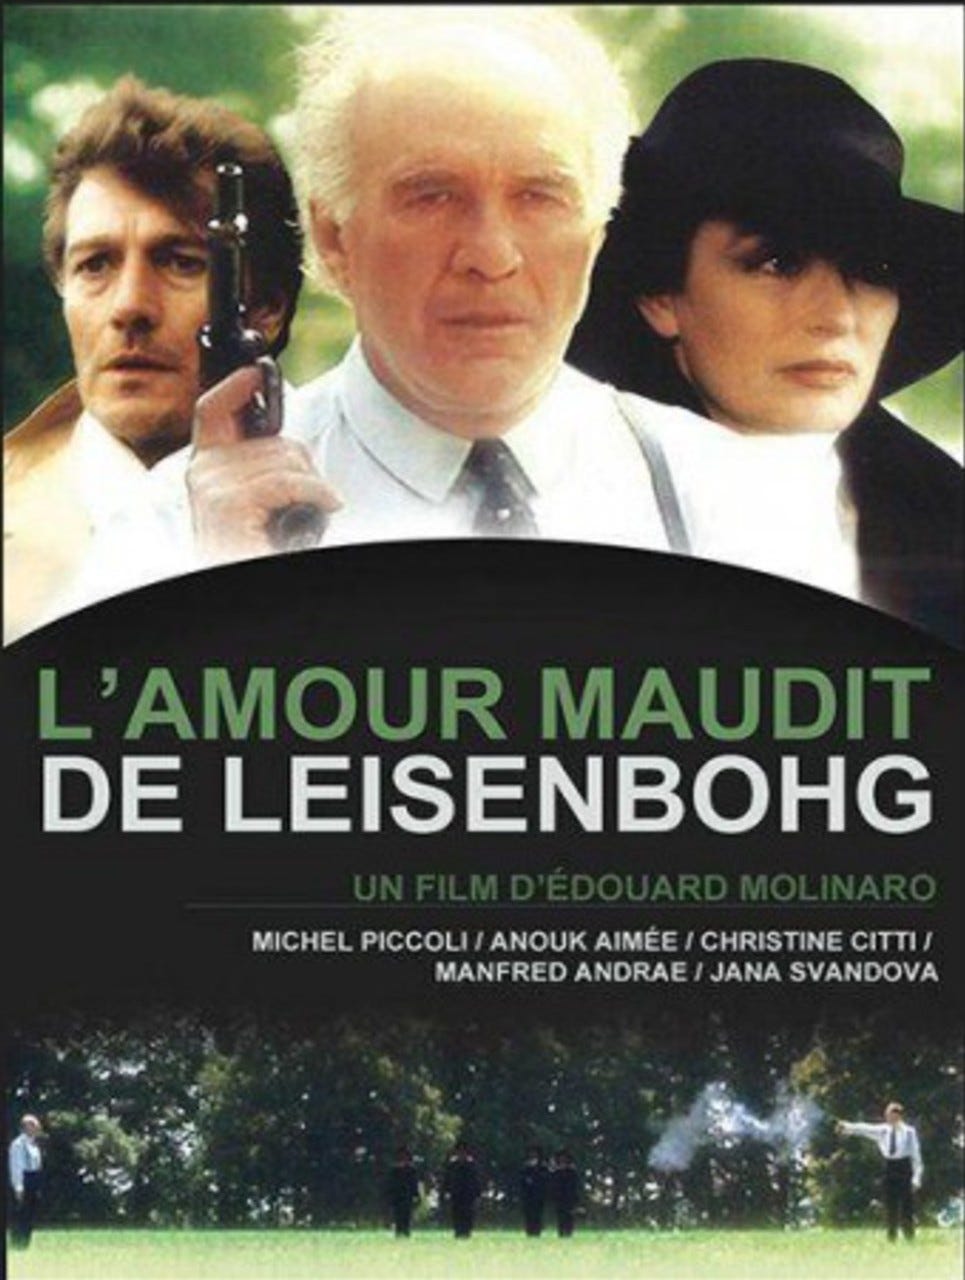 L'amour maudit de Leisenbohg (1991) | Poster